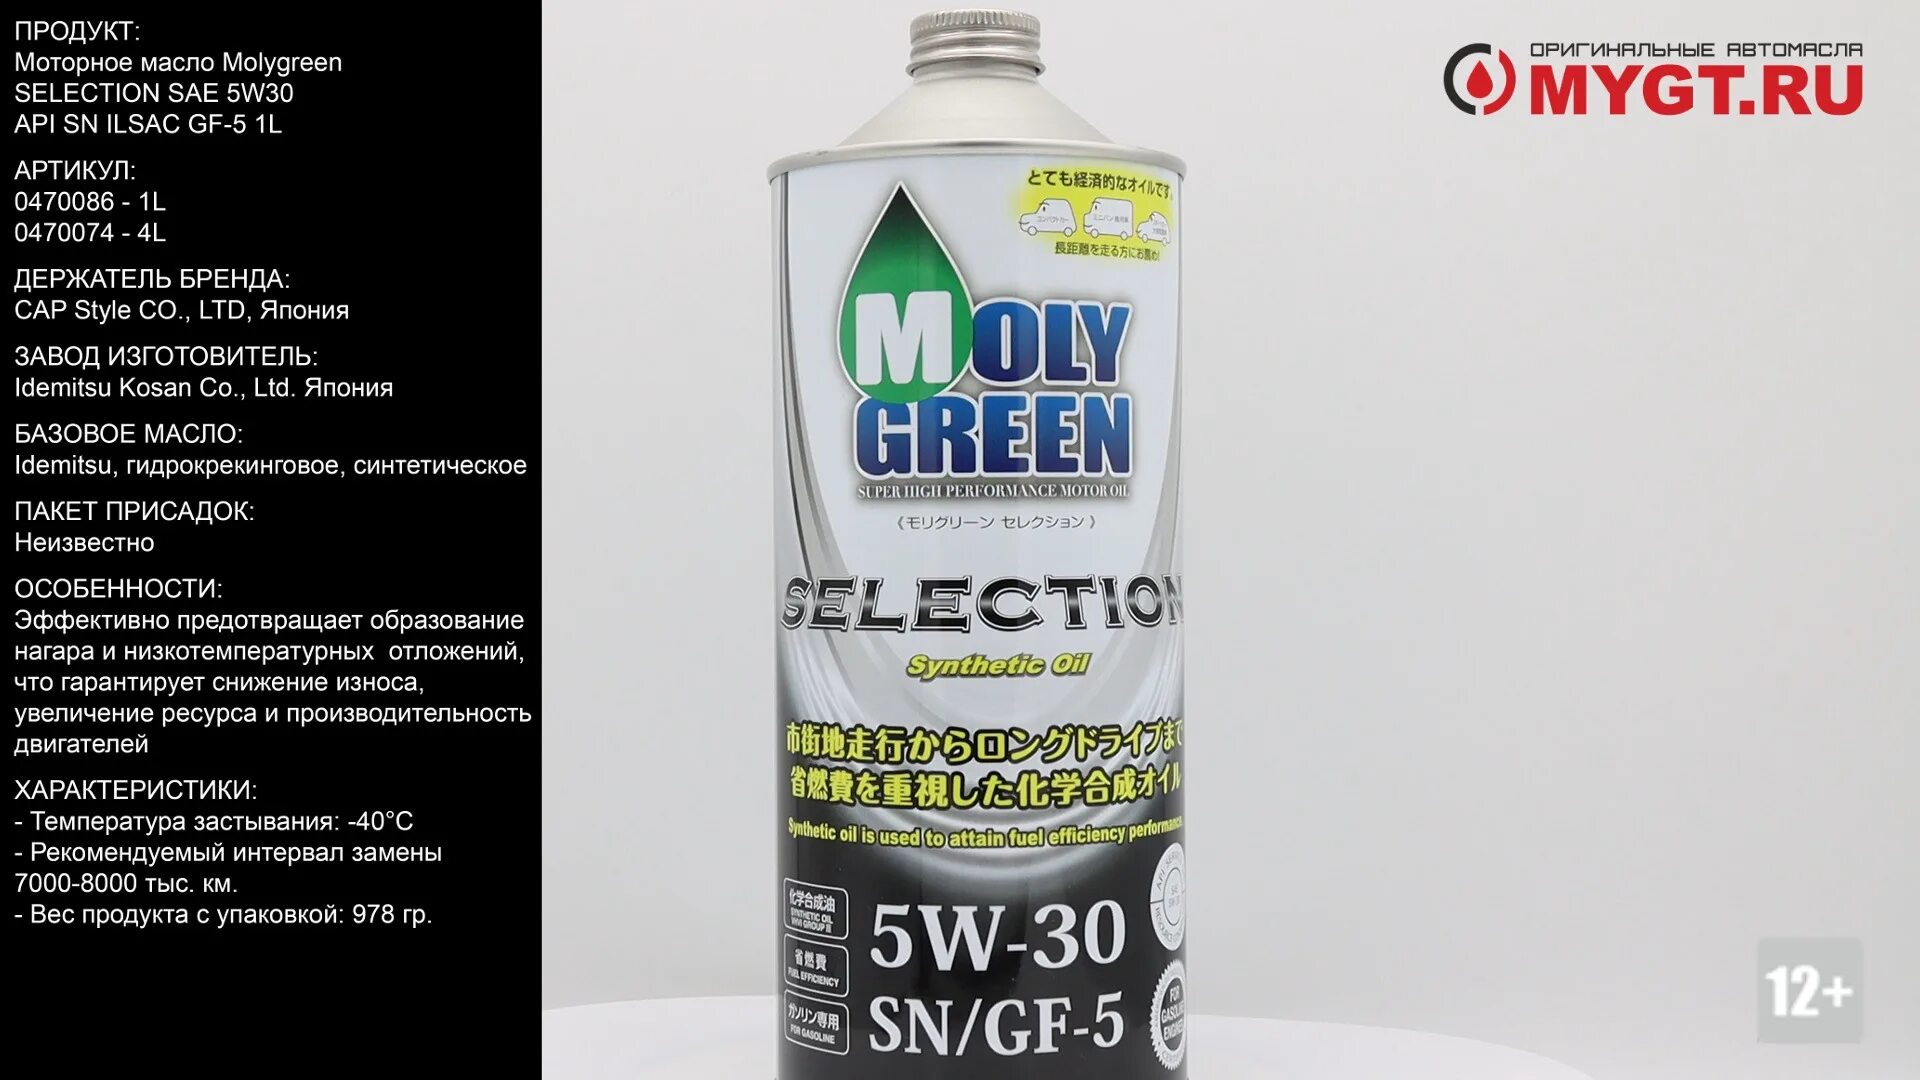 Moly Green 5w30 selection. Масло Moly Green 5w30 selection. Moly Green selection 5w30 4л 0470074. Moly Green Premium Black SAE 5w-30 API SN ILSAC gf-5 4l 0470022.